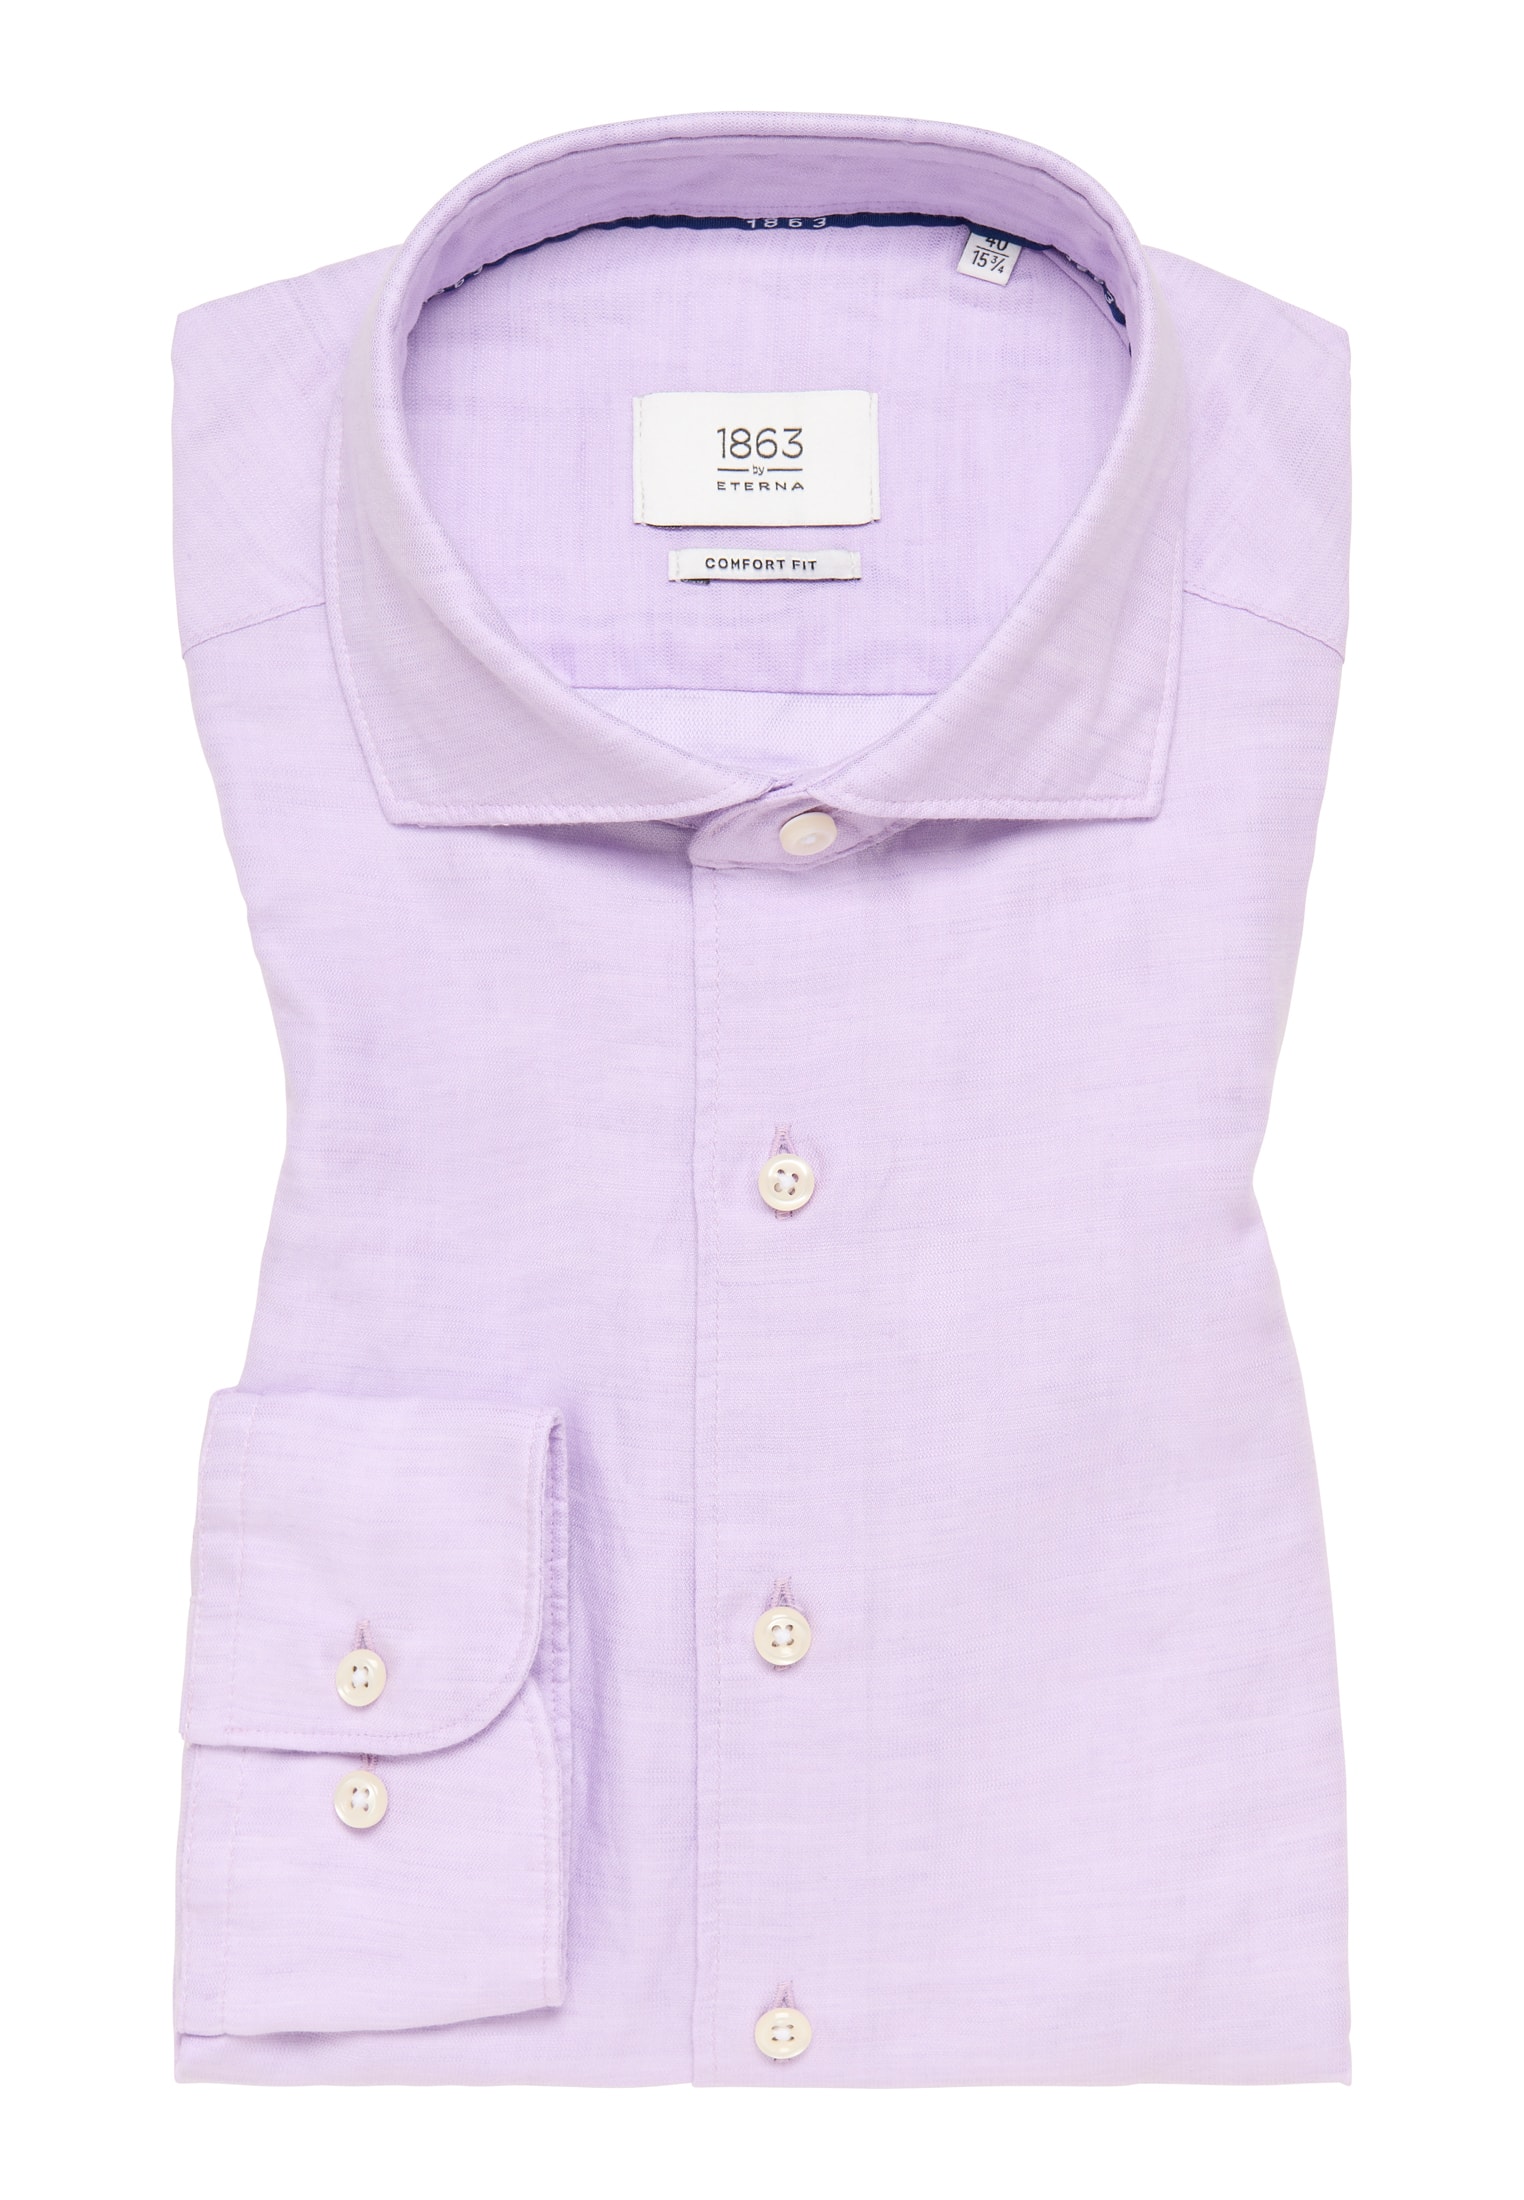 COMFORT FIT Linen Shirt in | | | | Langarm lavender 46 1SH00625-09-11-46-1/1 unifarben lavender